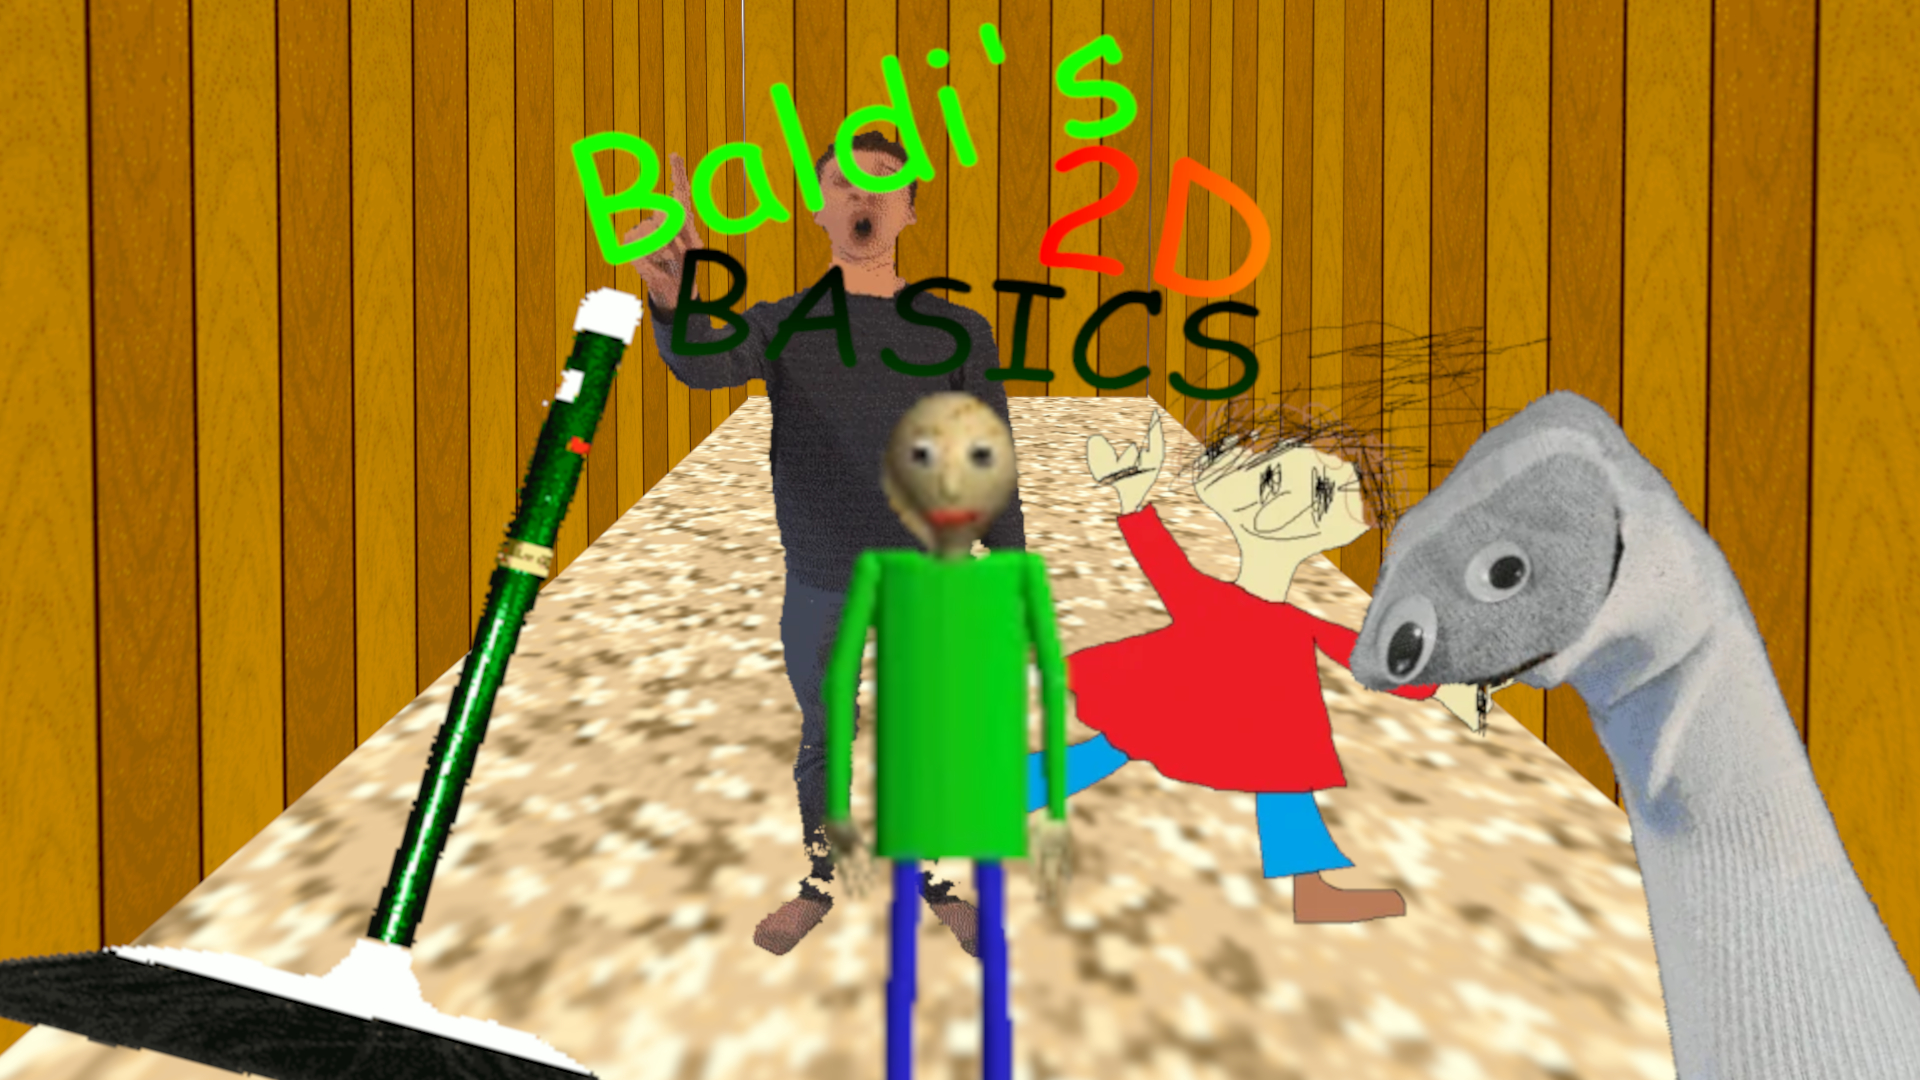 Baldi's Basics Plus 2D